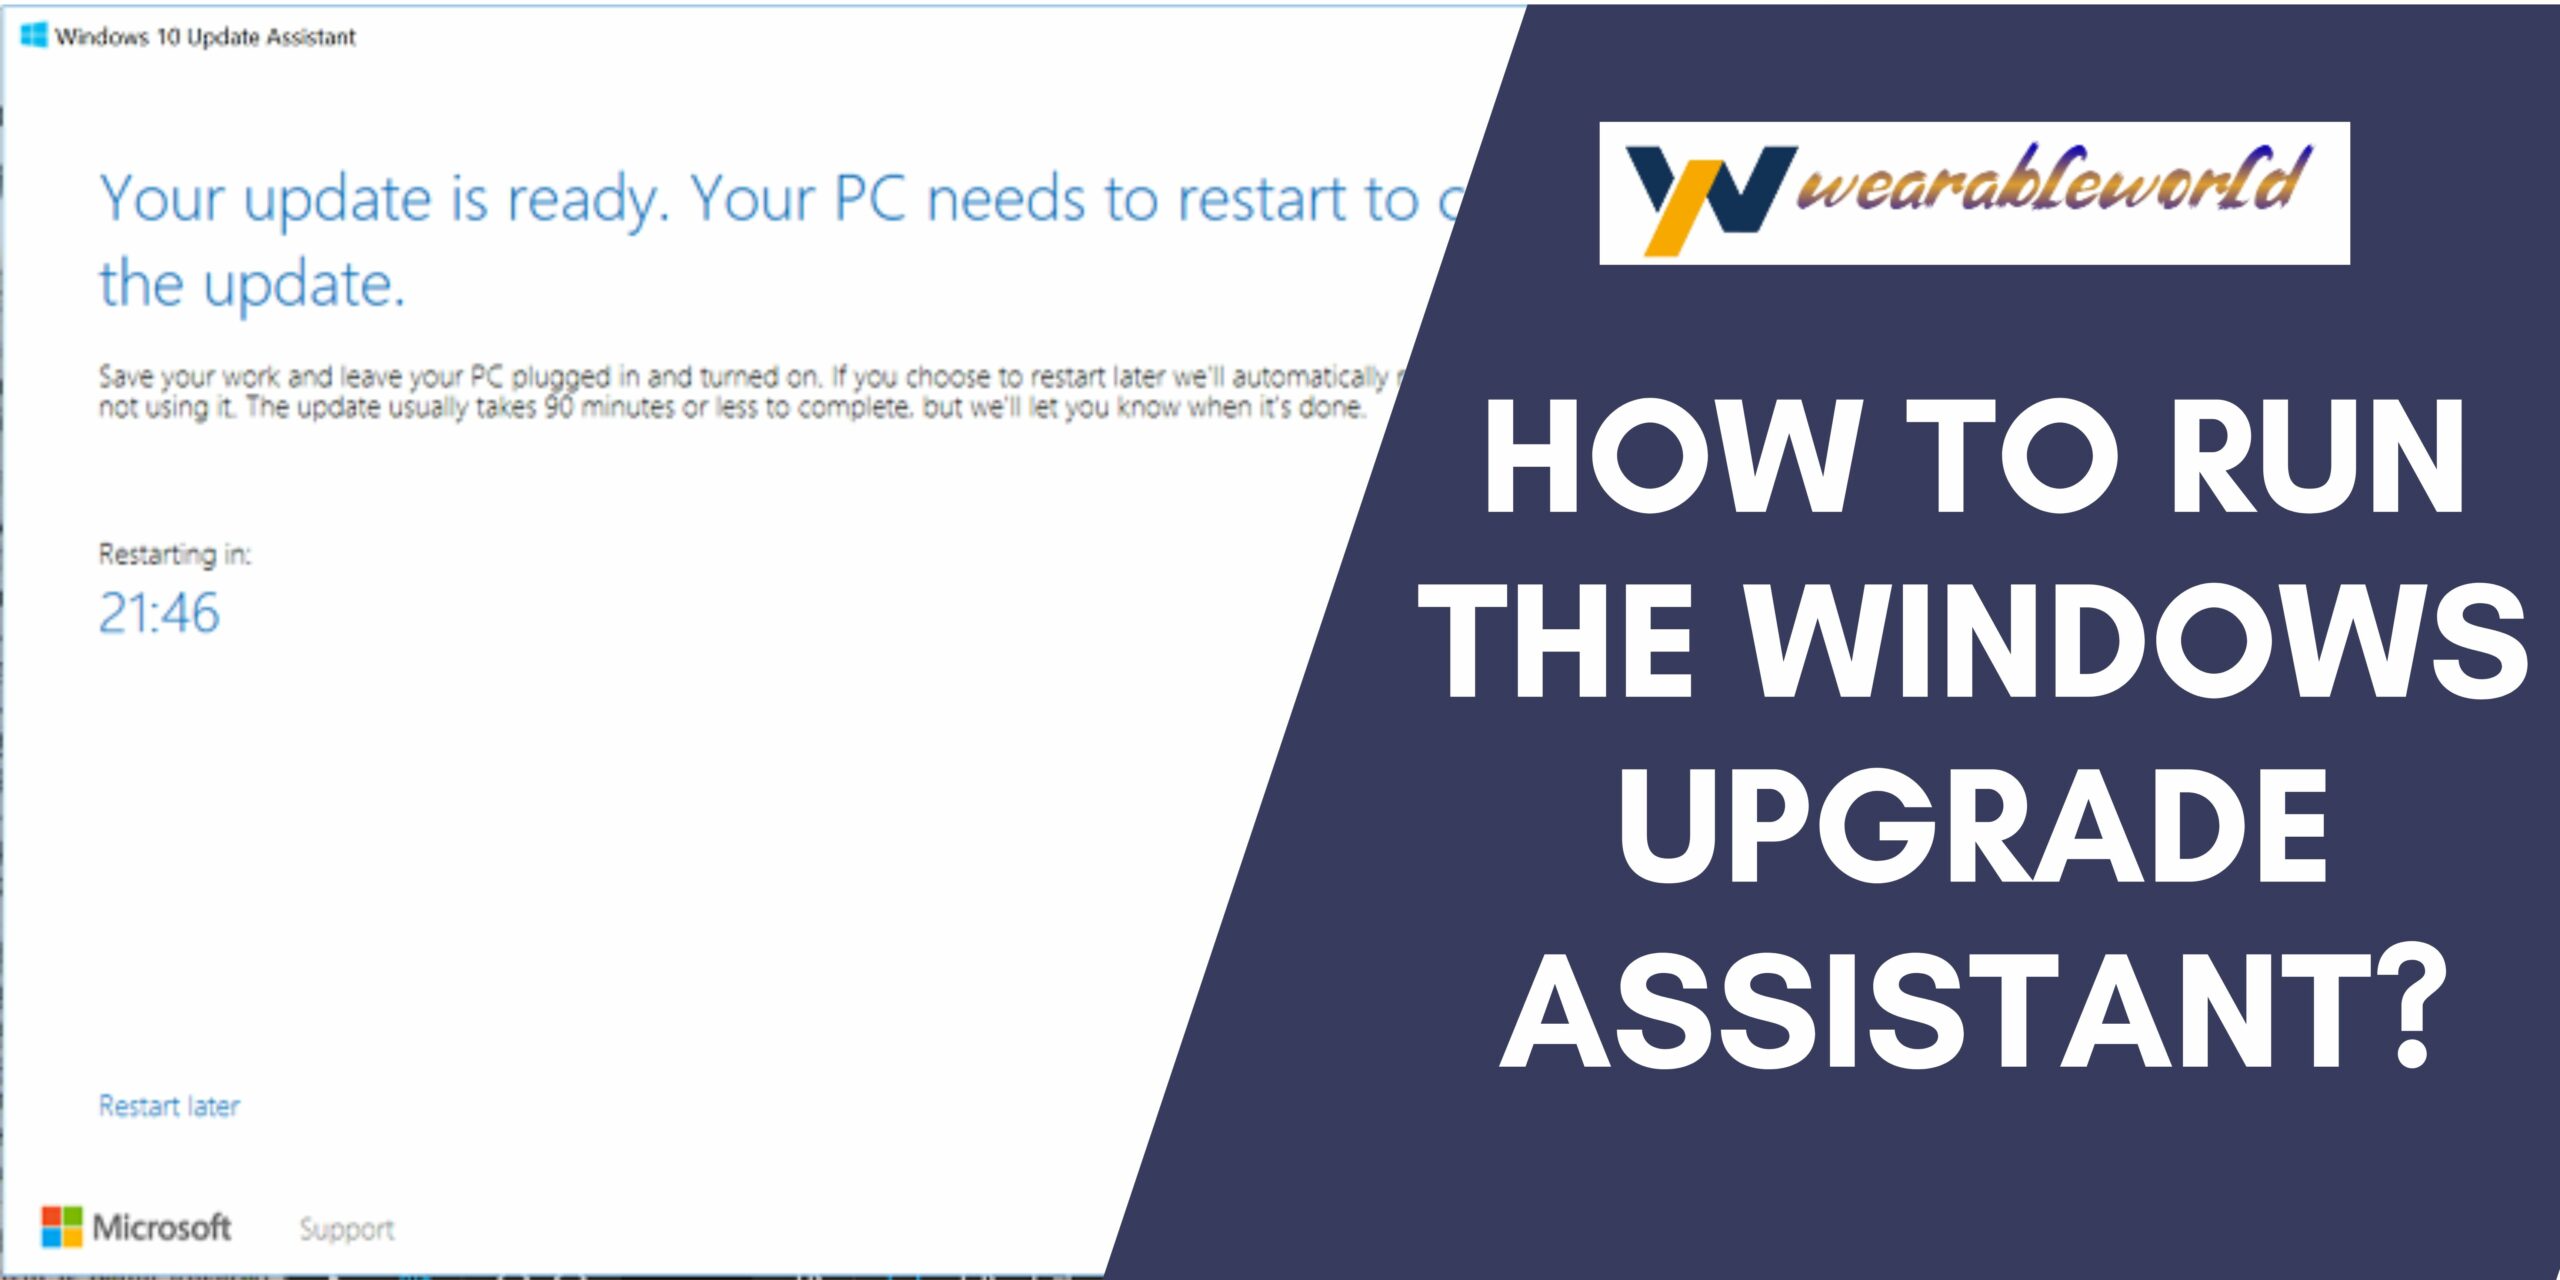 Run the Windows upgrade assistant